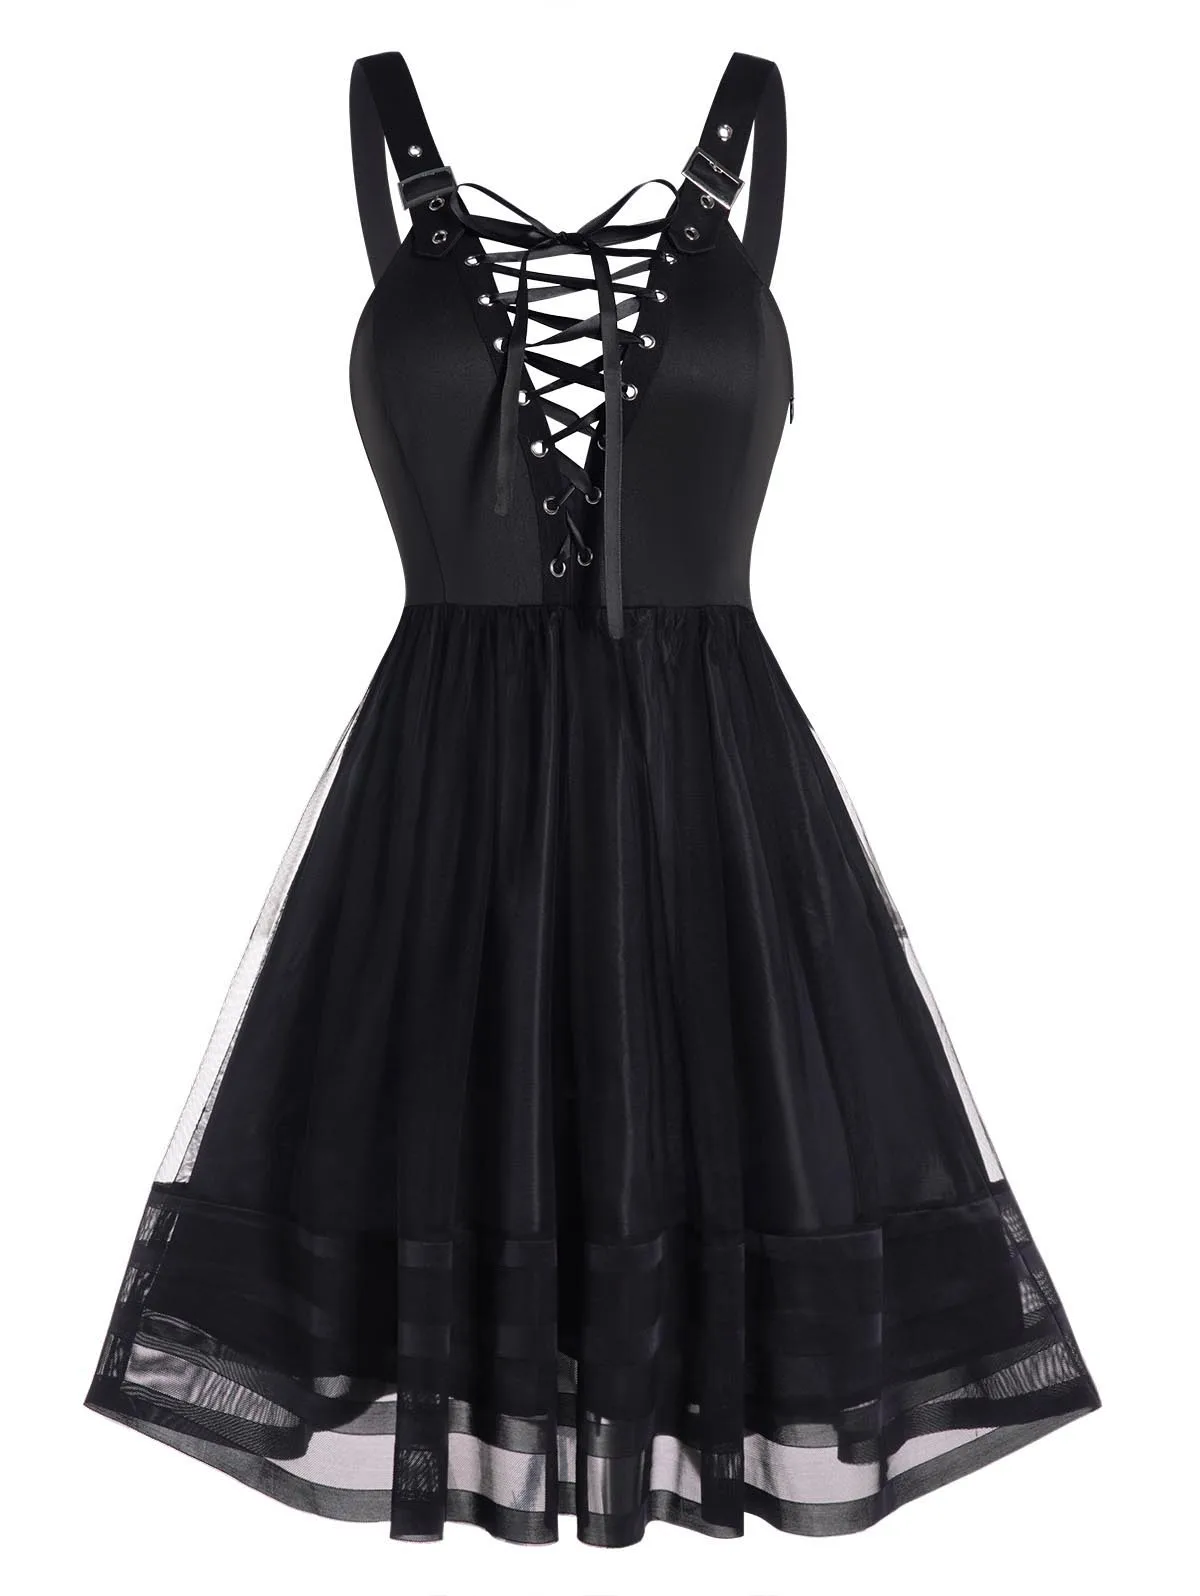 

Dressfo Women Solid Black Dresses Punk Style Lace Up Mesh Overlay A Line Dress Adjustable Buckle Strap Sleeveless Dress